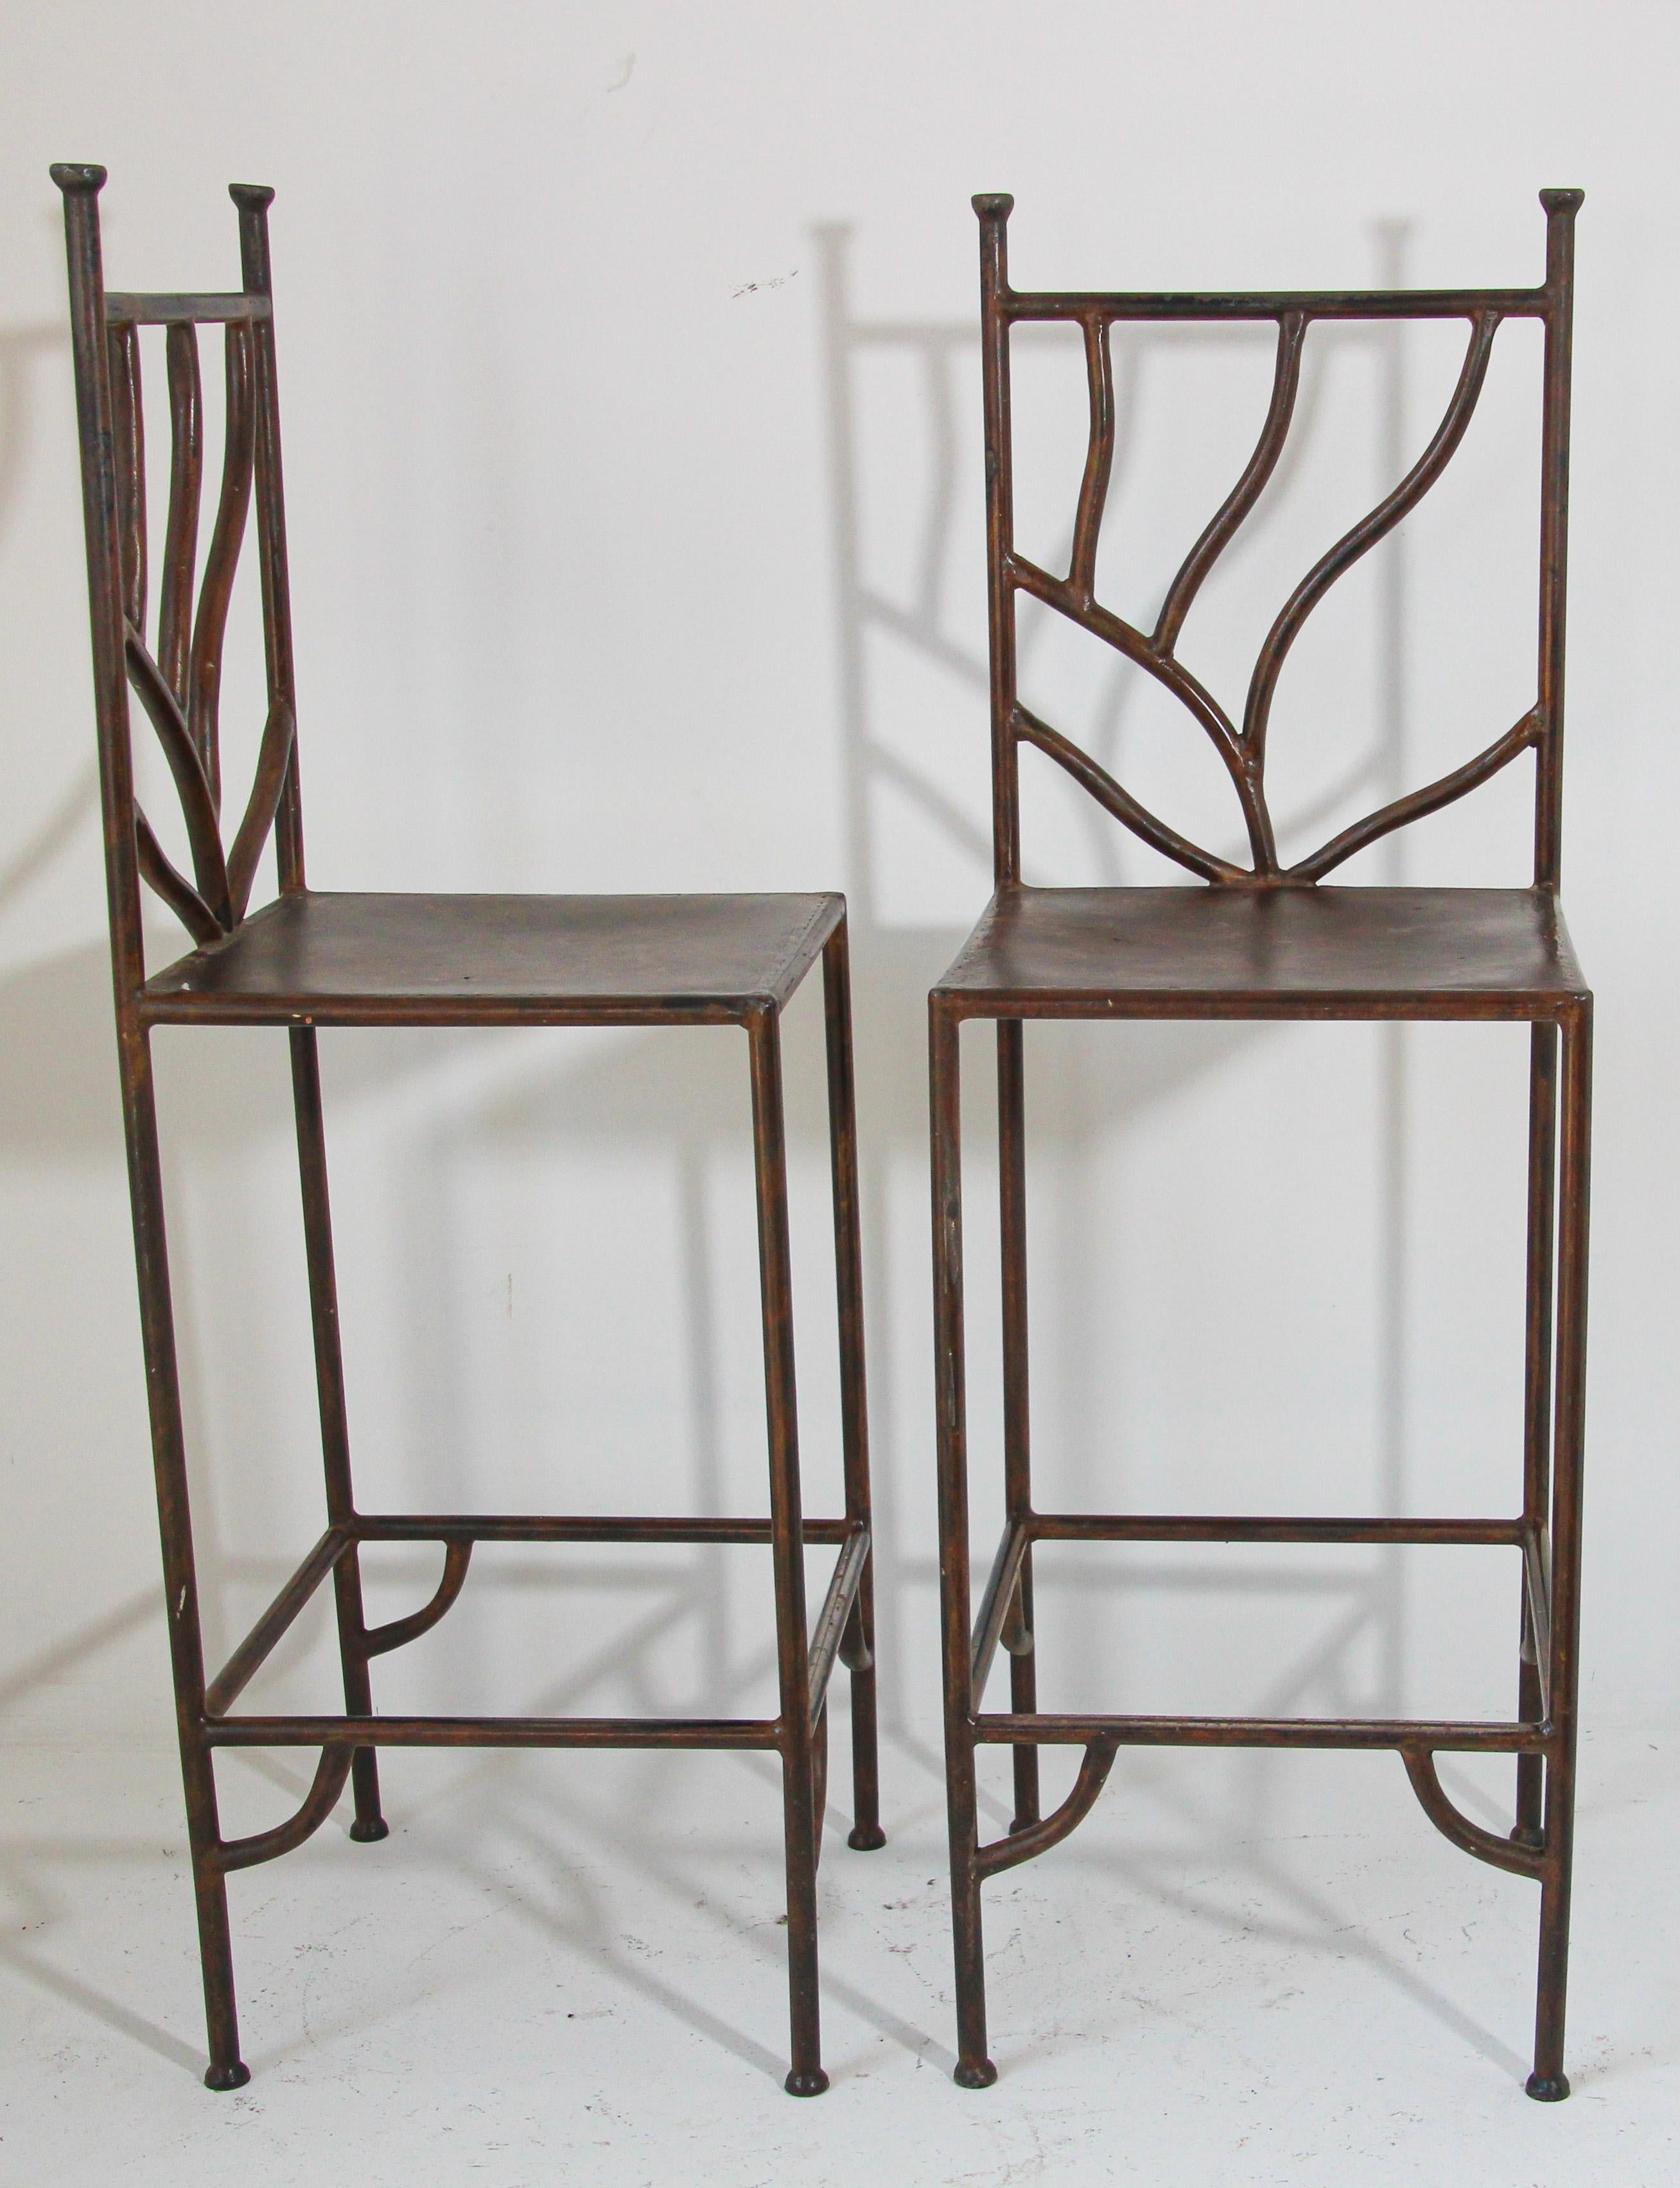 wrought iron bar stools with backs